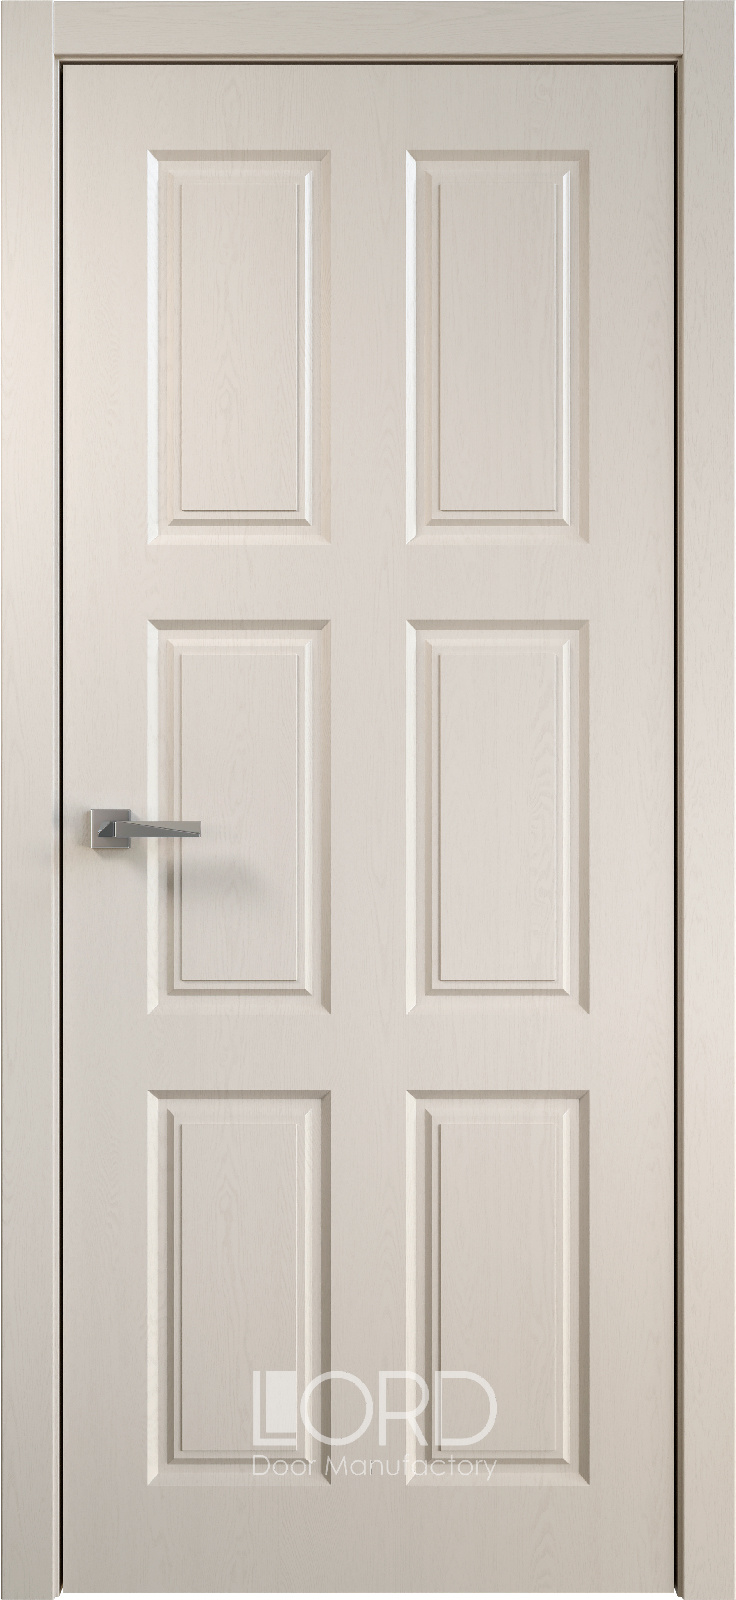 Лорд Межкомнатная дверь K 27 ДГ, арт. 22856 - фото №1